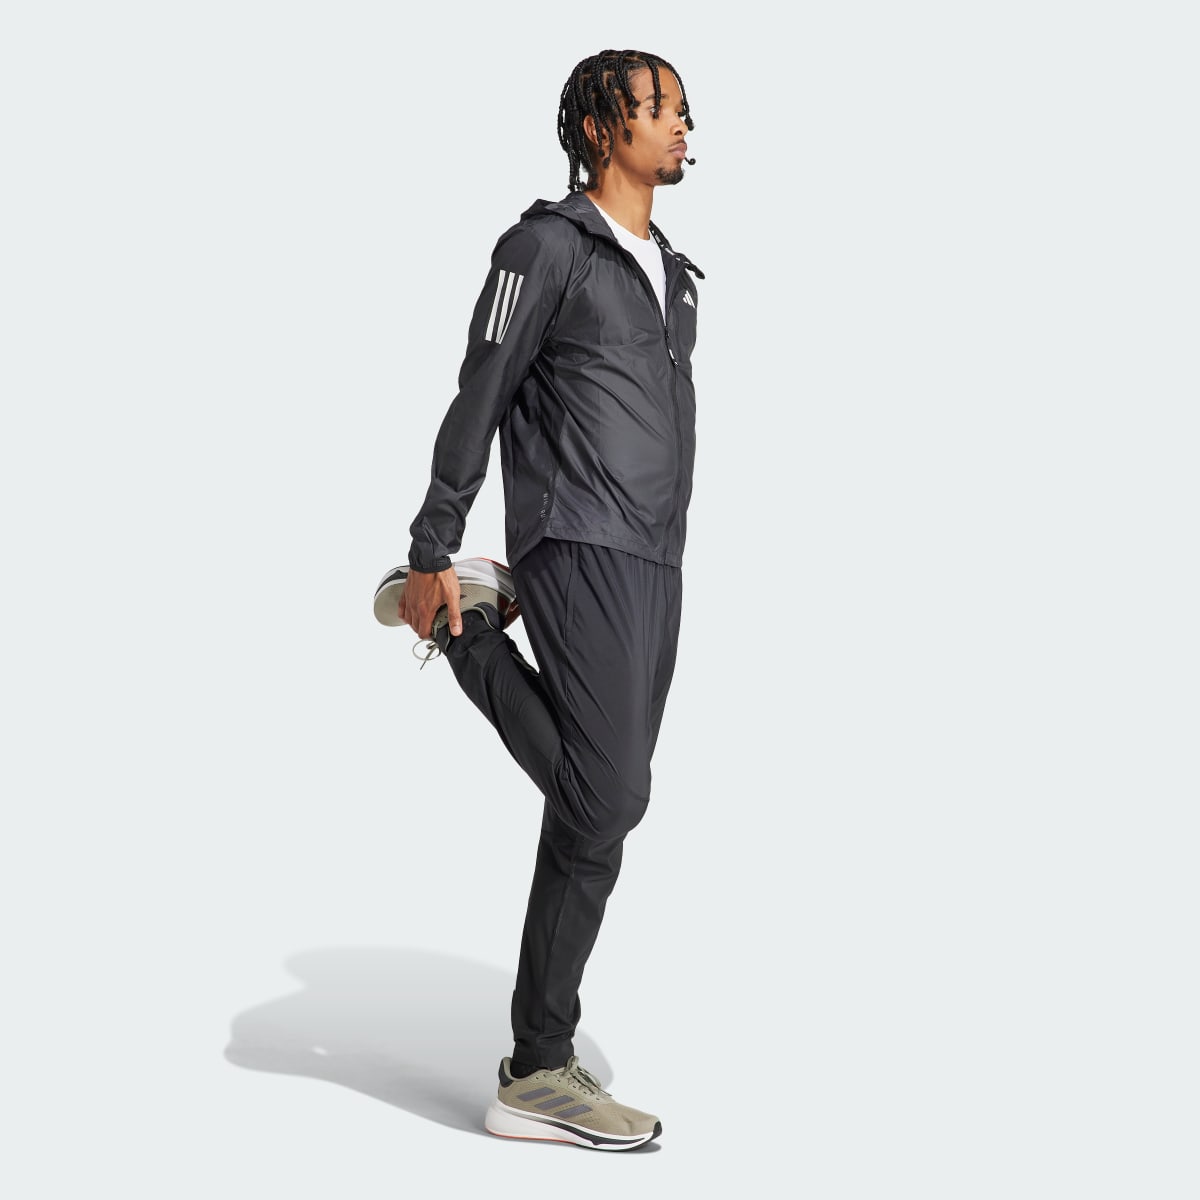 Adidas Own the Run Jacket. 4